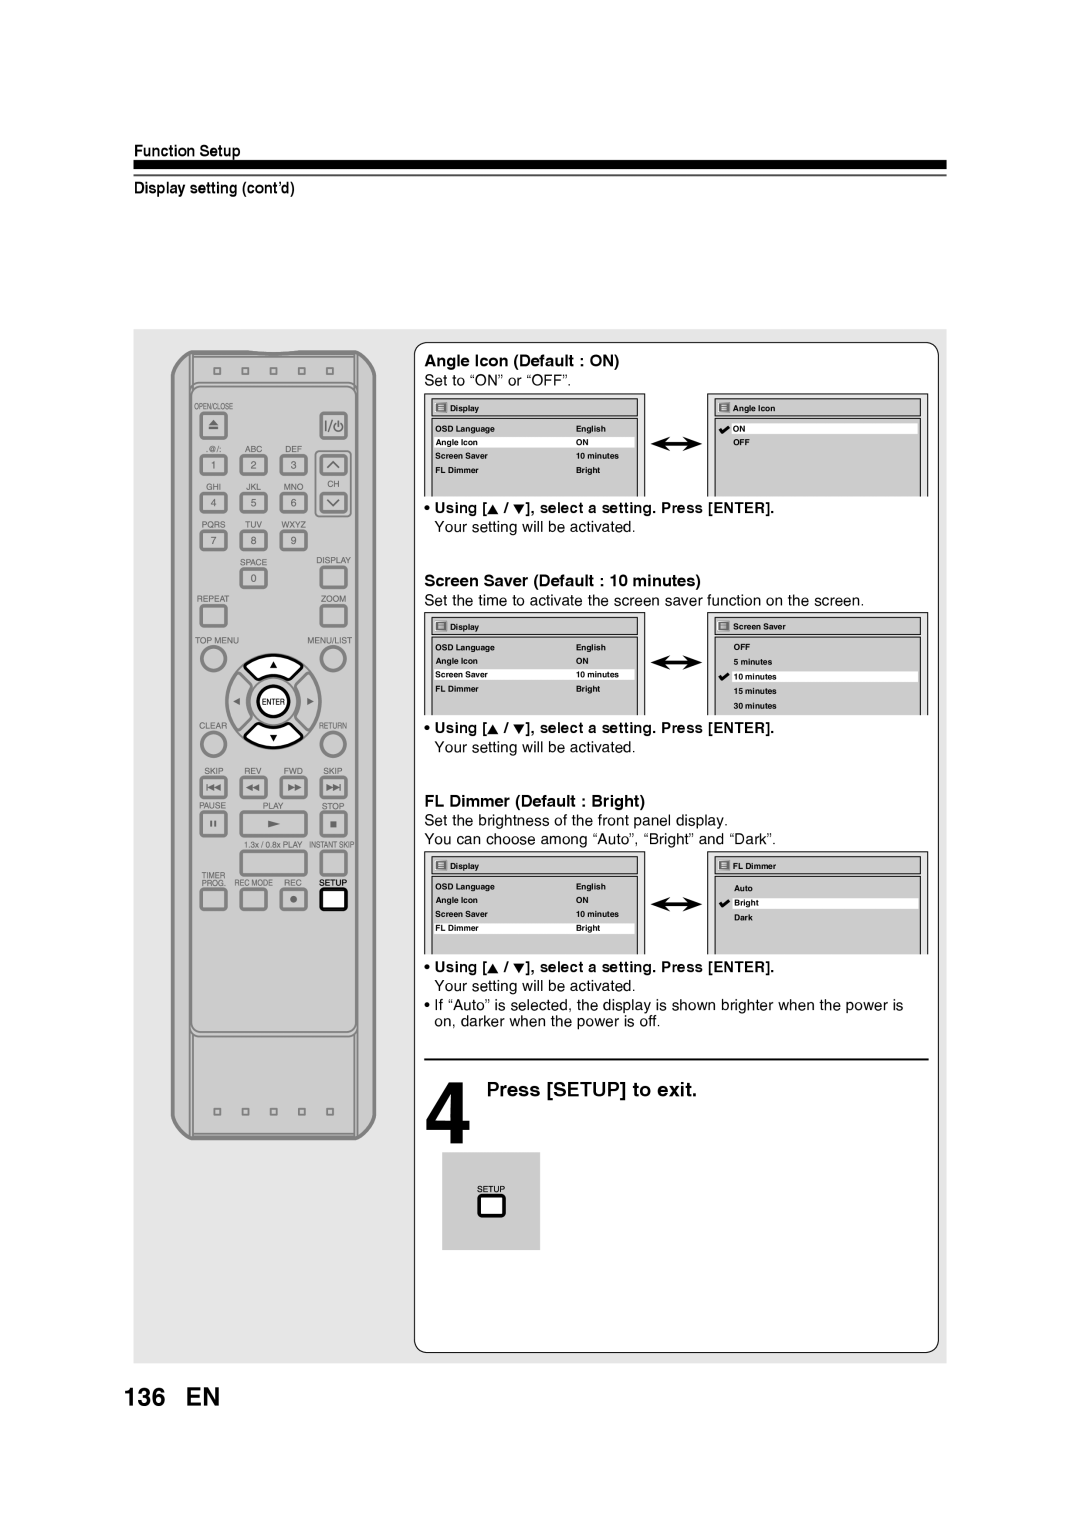 Toshiba D-RW2SU/D-RW2SC manual 136 EN, Press SETUP to exit, Function Setup Display setting cont’d Angle Icon Default ON 